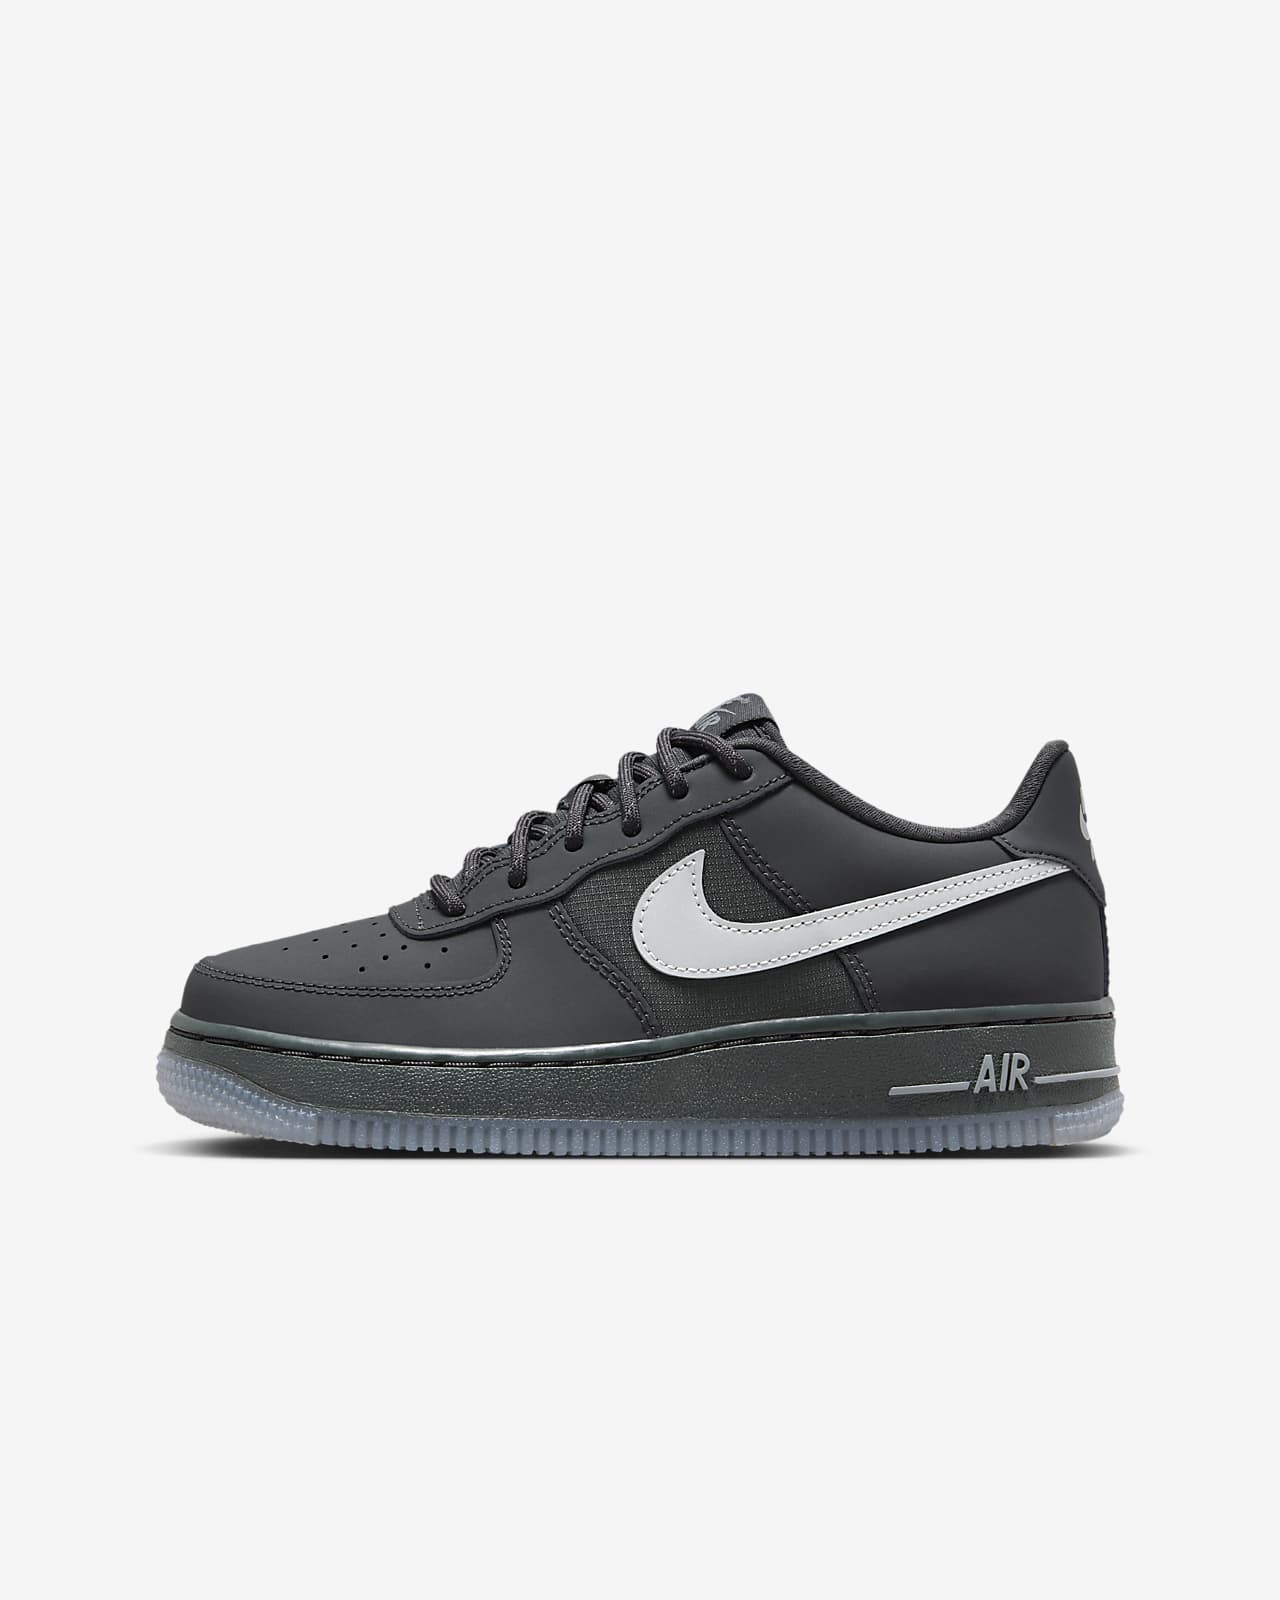 Nike Air Force 1 High LV8 (Black/Silver) - Sneaker Freaker